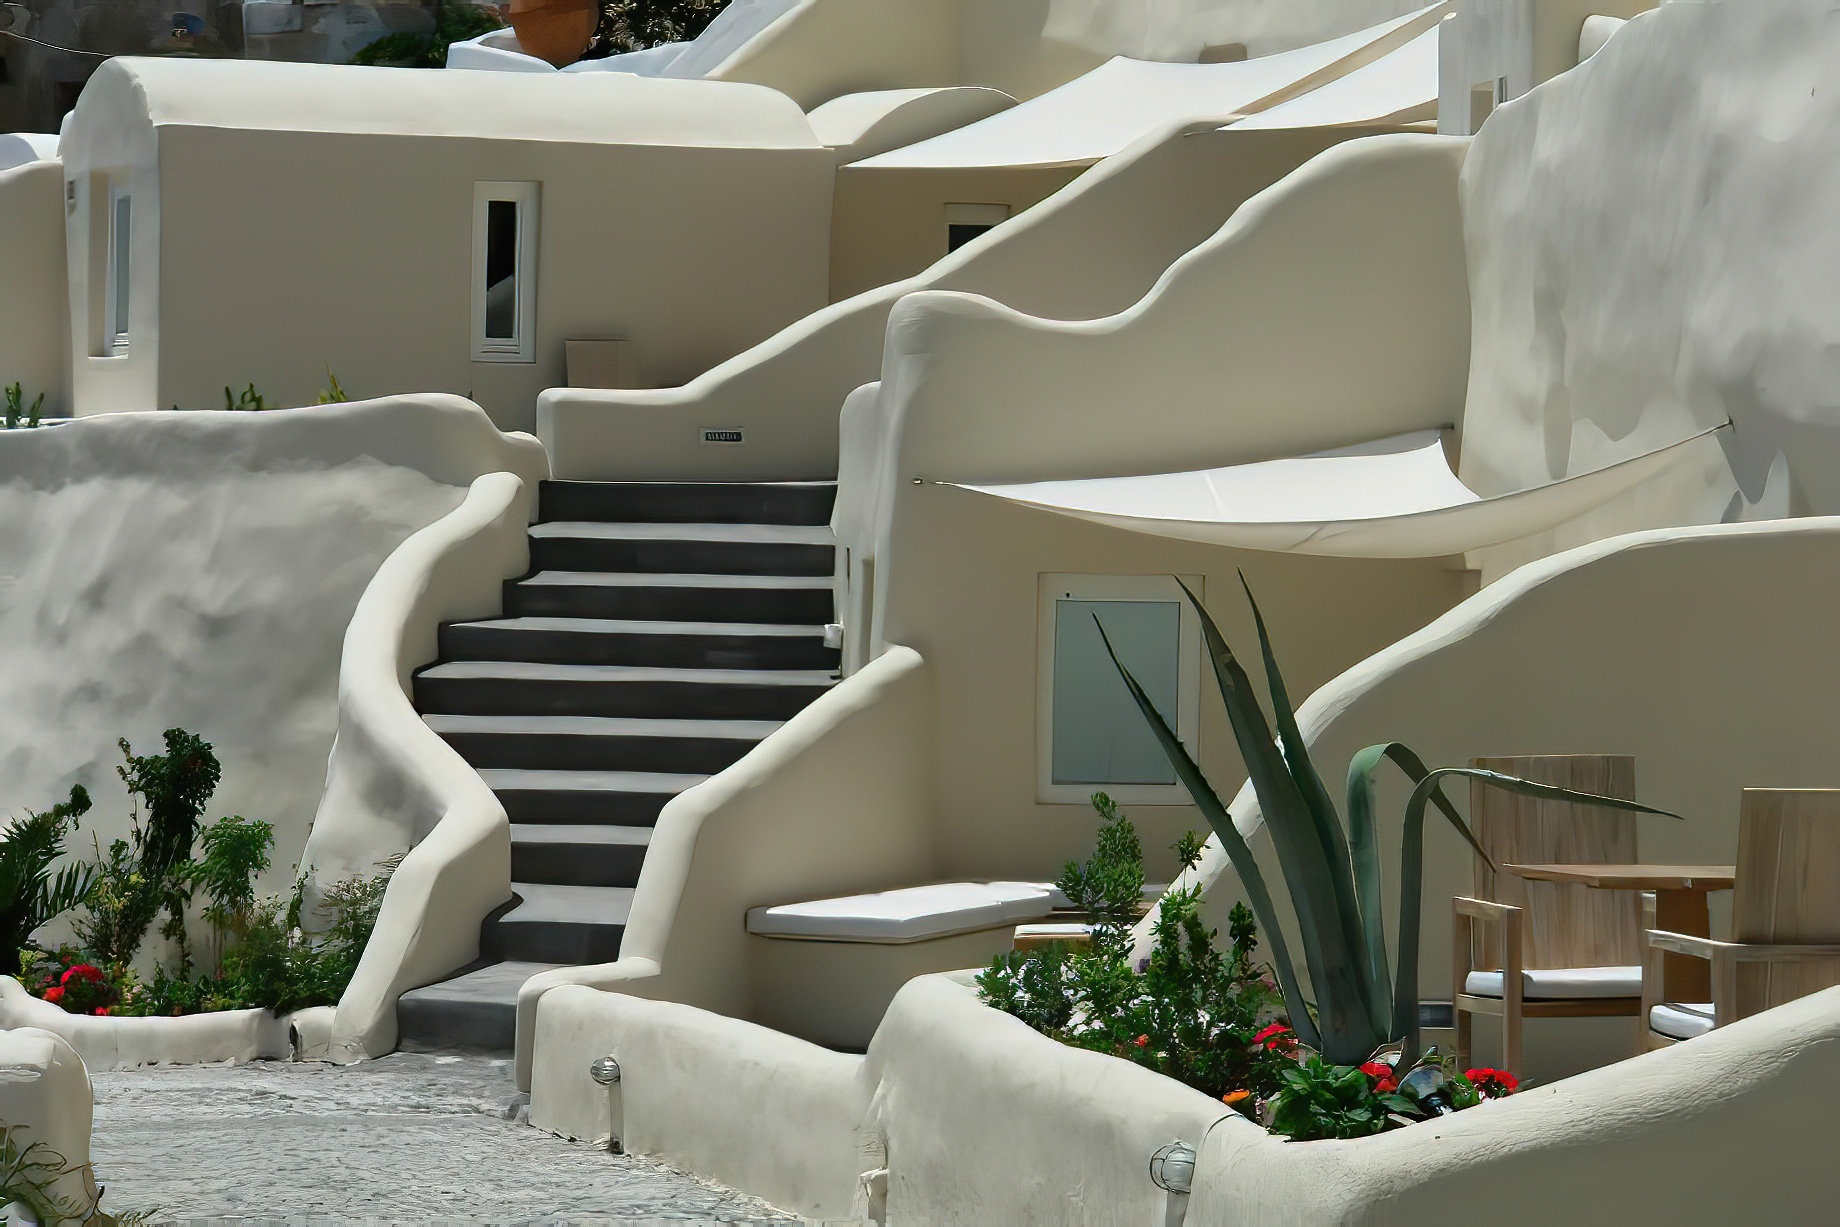 Mystique Hotel Santorini – Oia, Santorini Island, Greece – Exterior Stairs